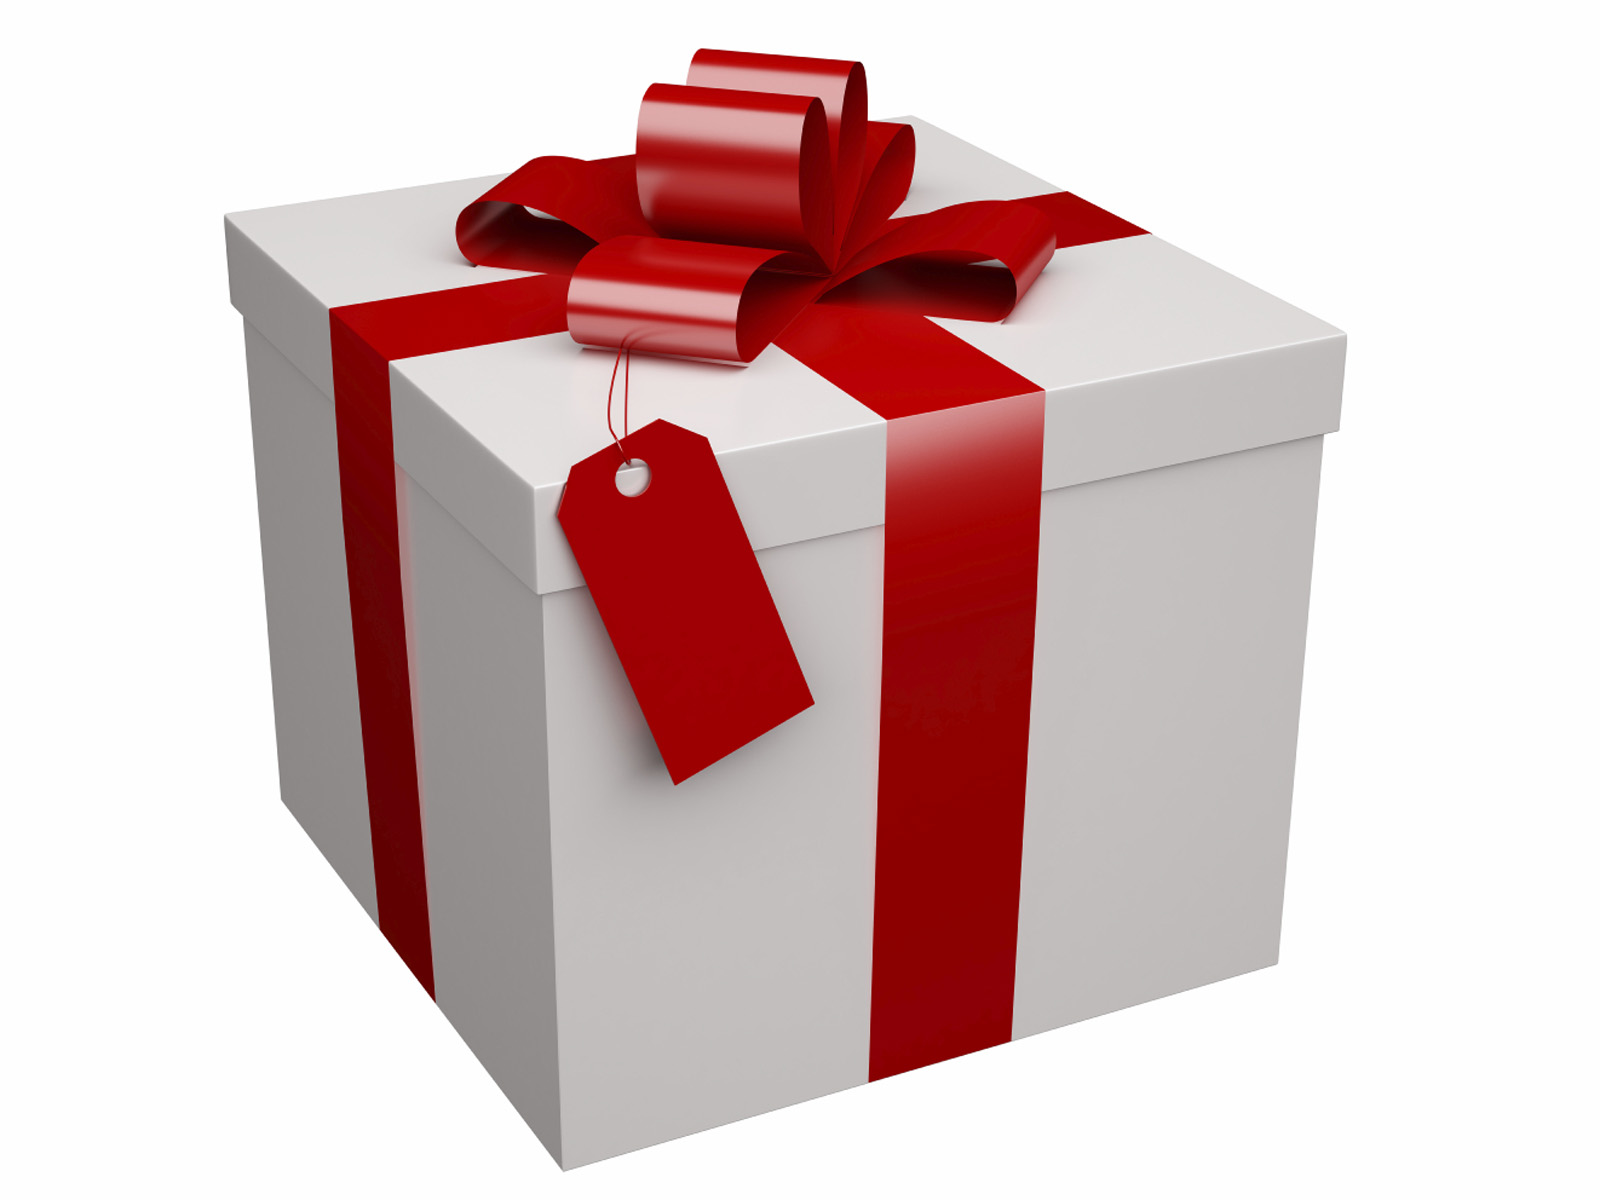 https://primalpotential.com/wp-content/uploads/2014/12/gift-for-holidays.jpg